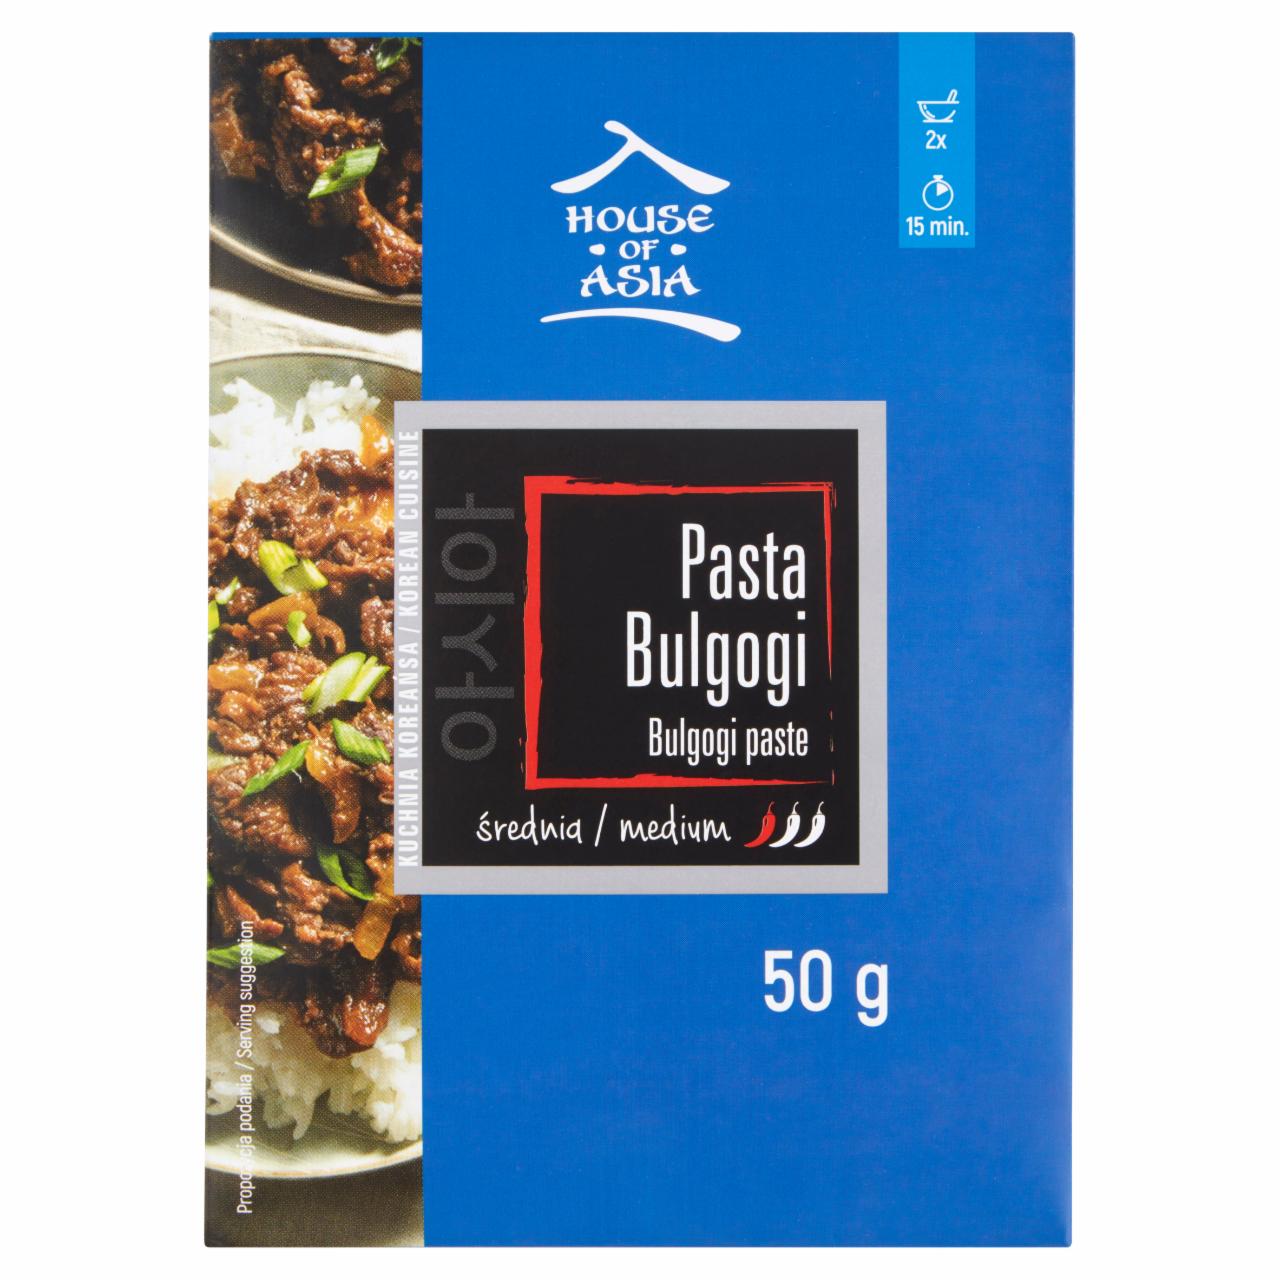 Zdjęcia - House of Asia Pasta bulgogi średnia 50 g